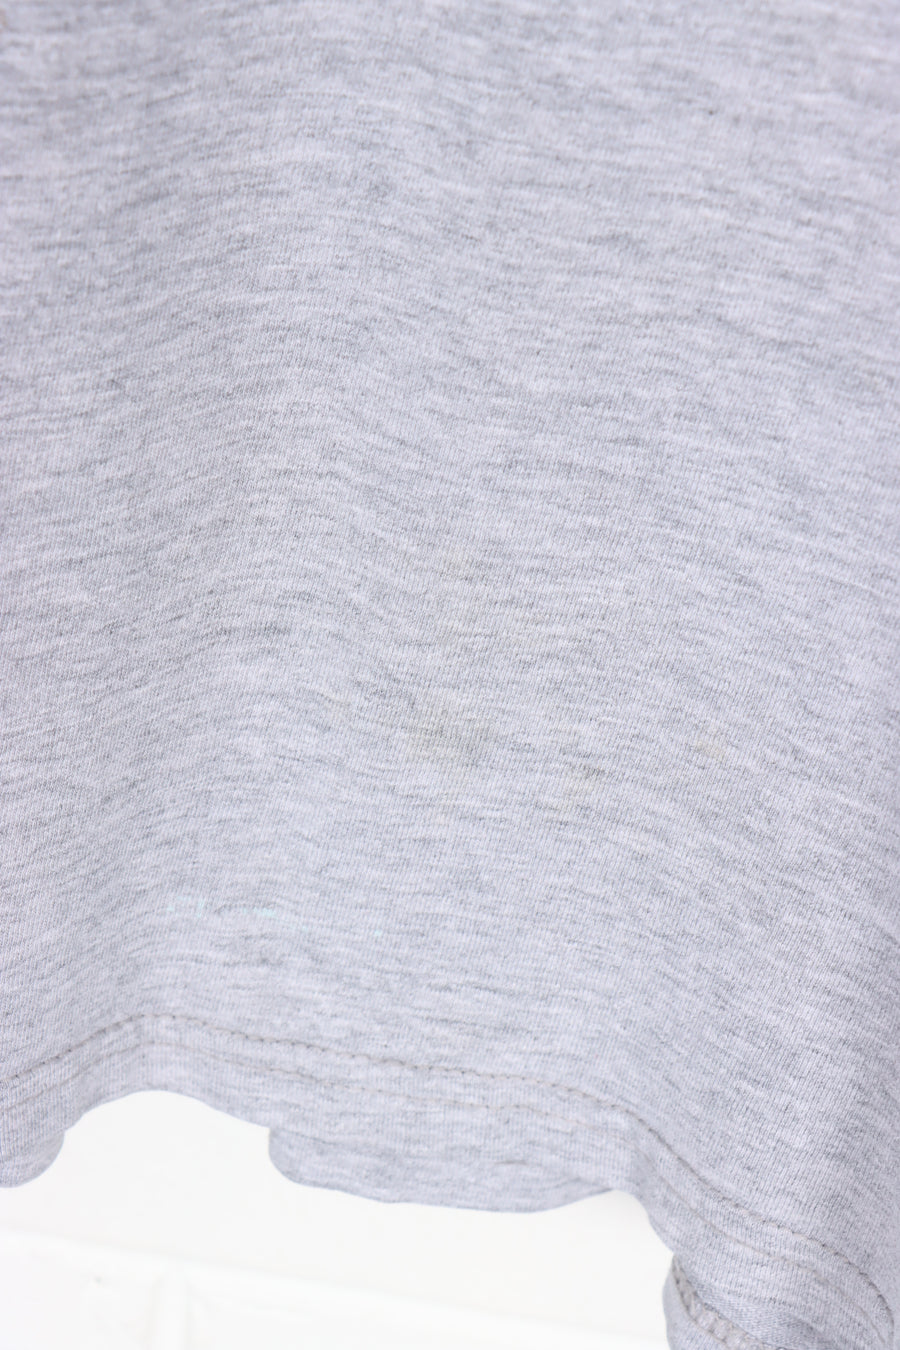 NIKE Grey Marle Embroidered Basic Tee (XL)